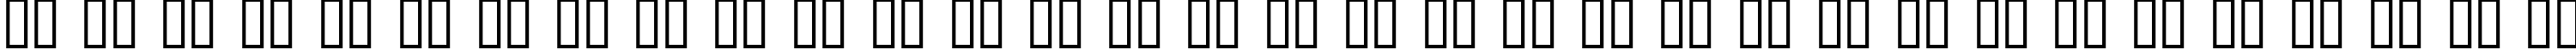 Пример написания русского алфавита шрифтом BeachType  Medium